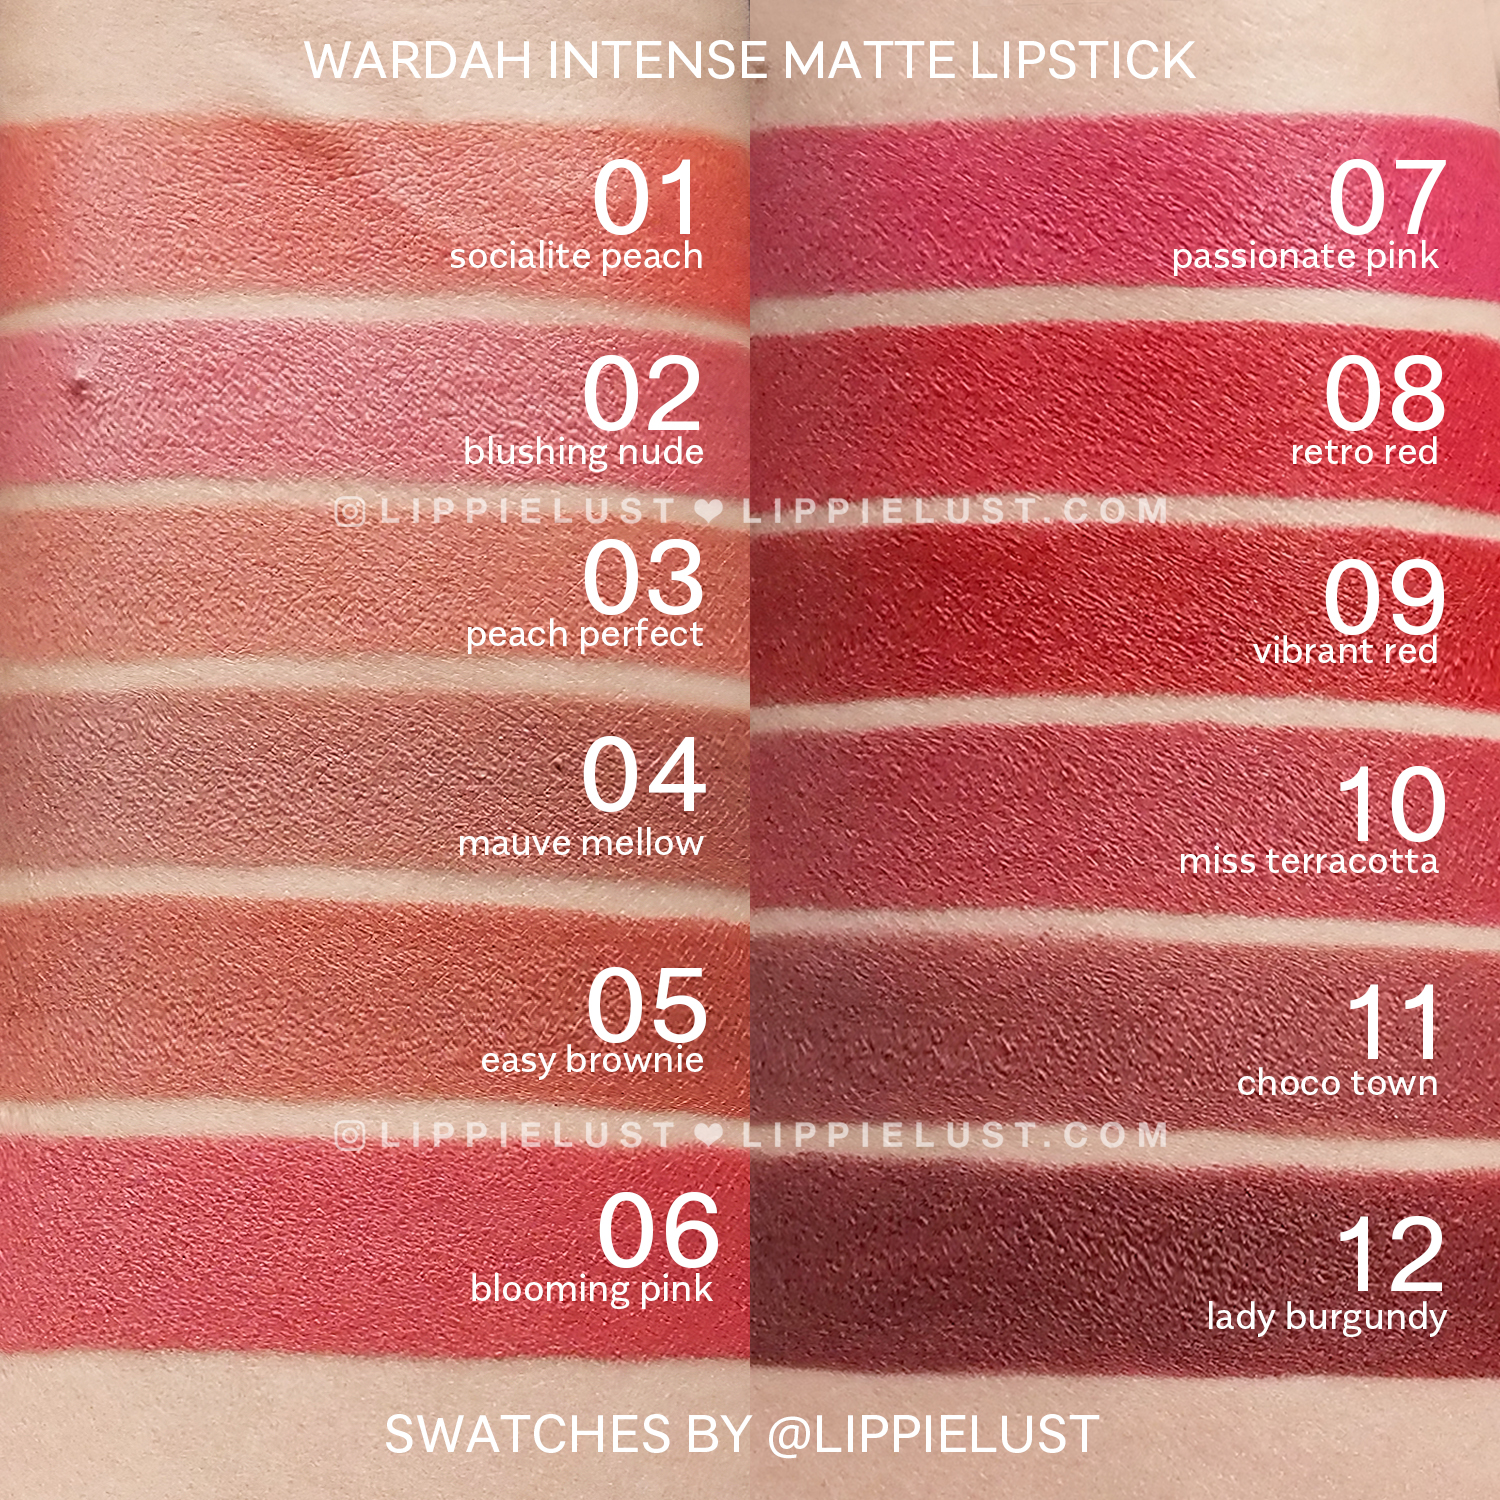 [SWATCH & REVIEW] Wardah Cosmetics Intense Matte Lipstick